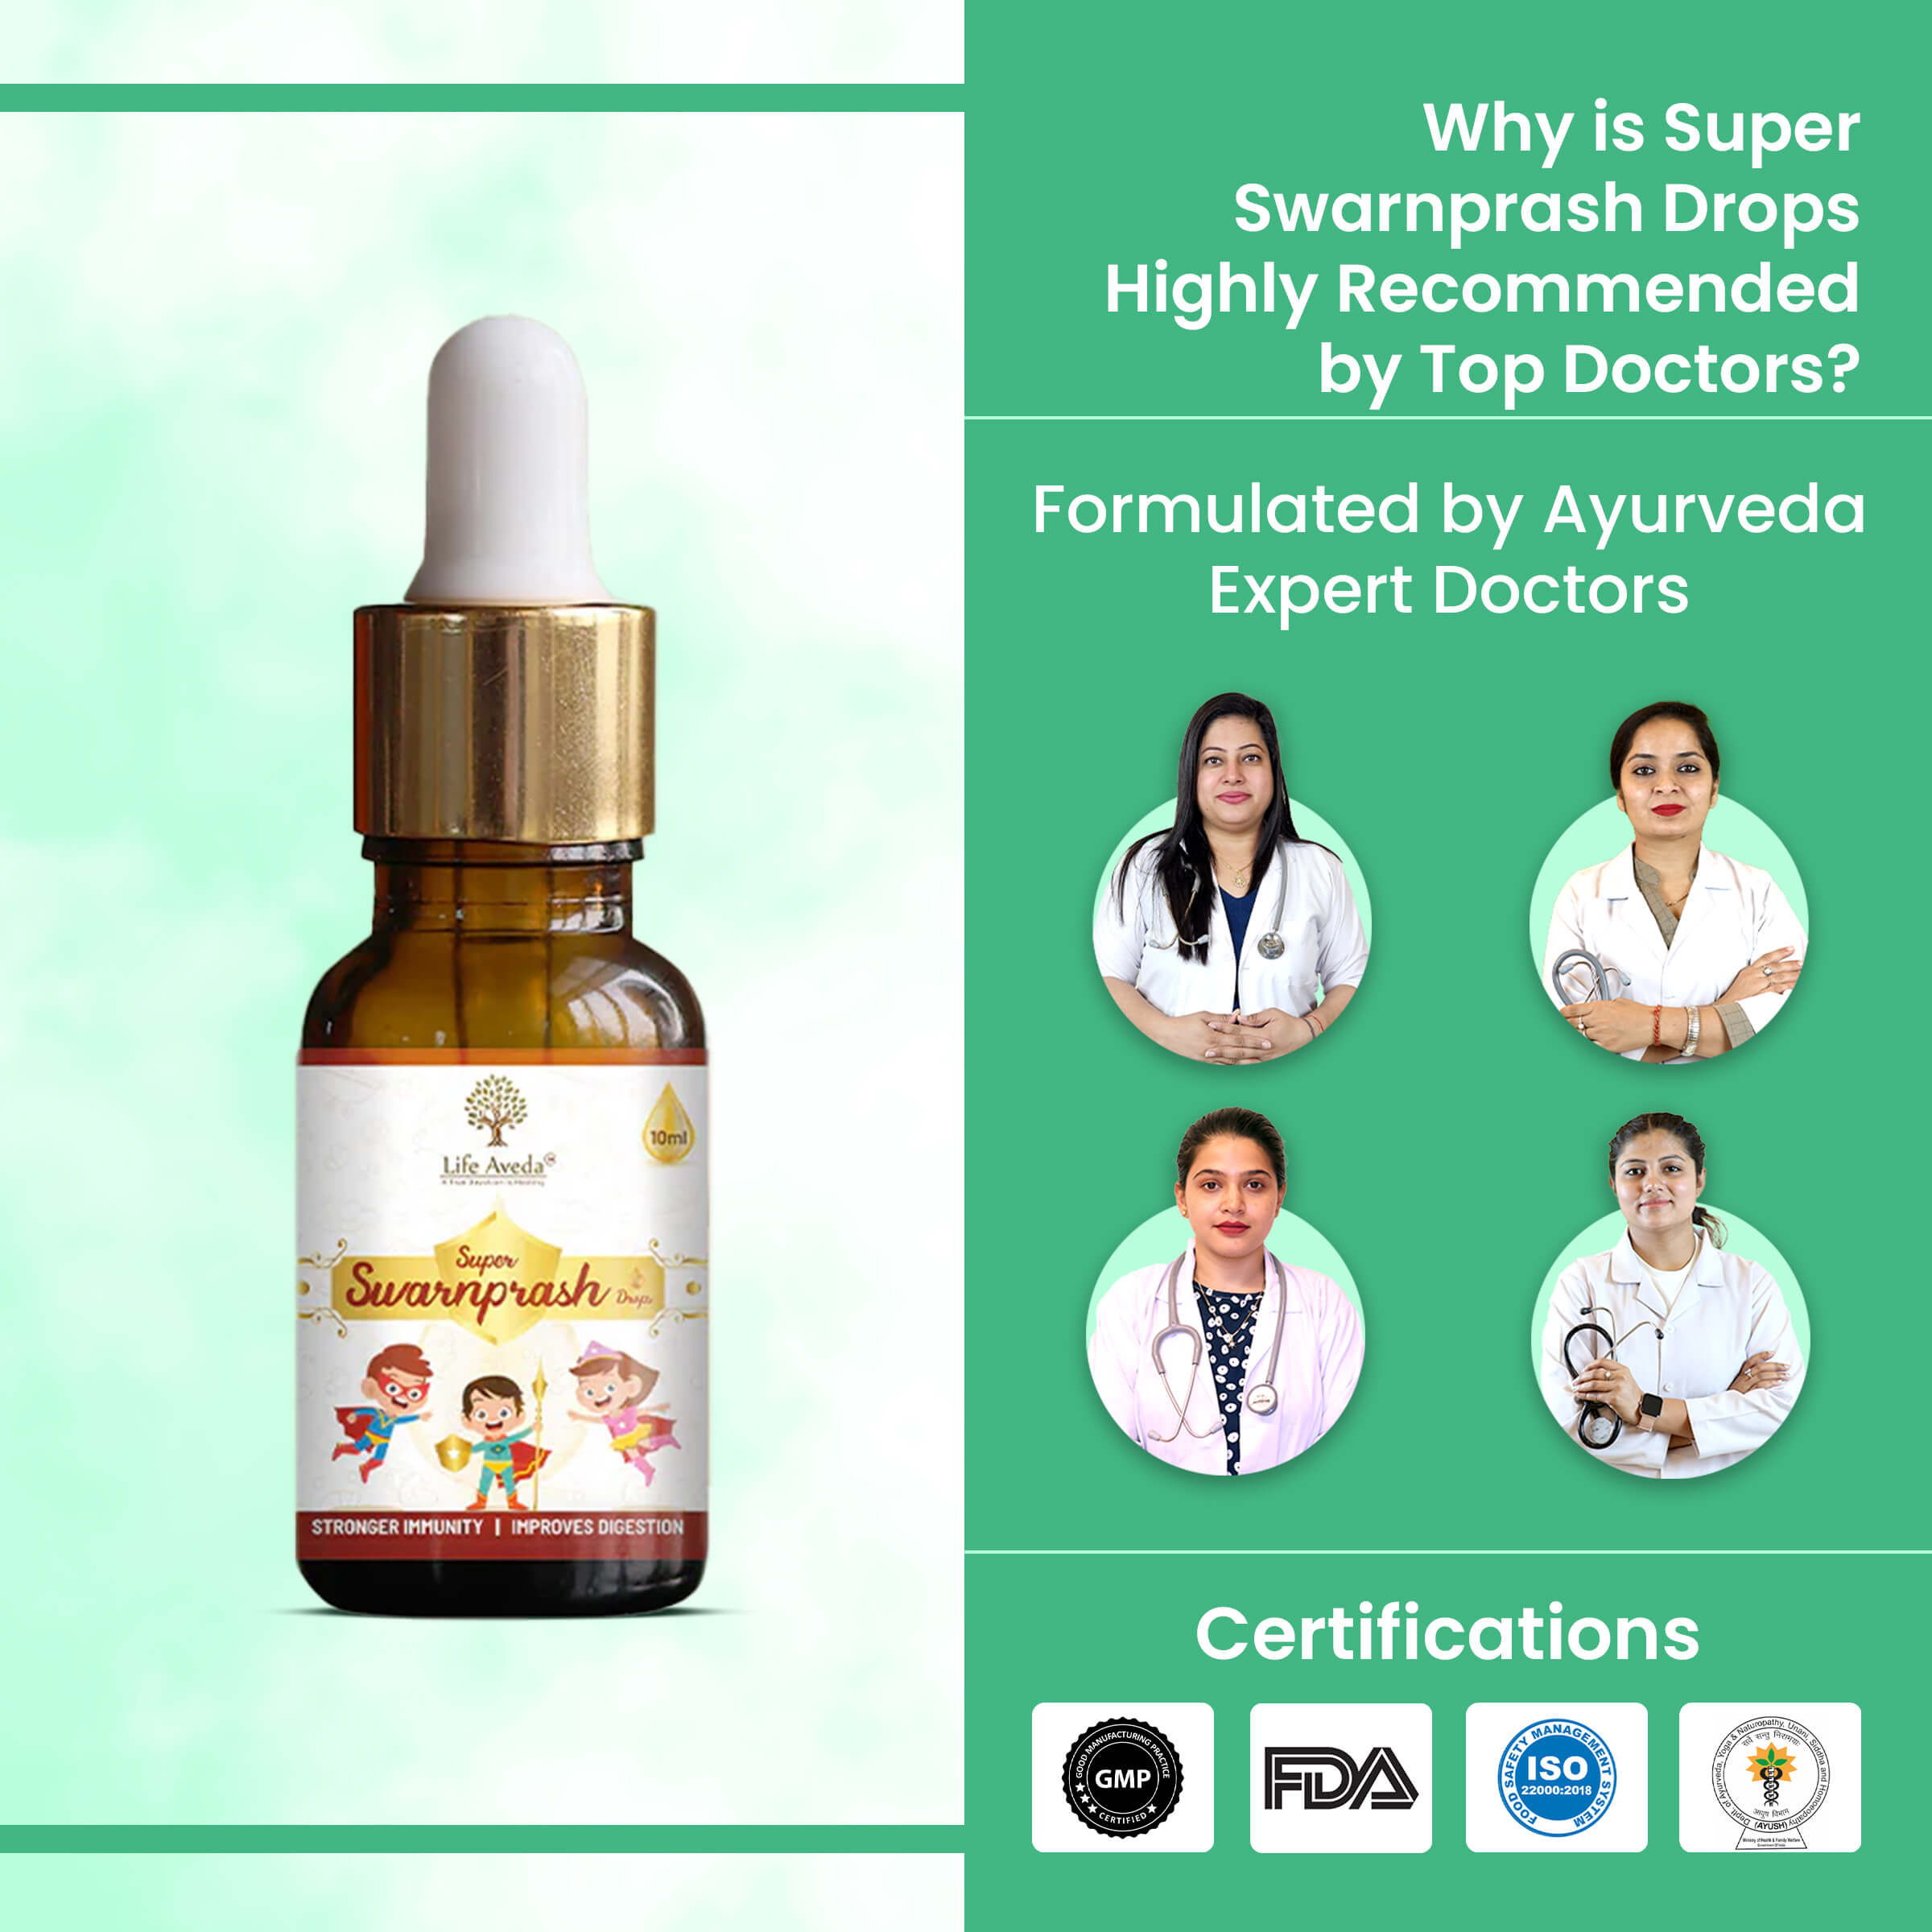 Life Aveda Super Swarnprash Drops Doctors Certifications